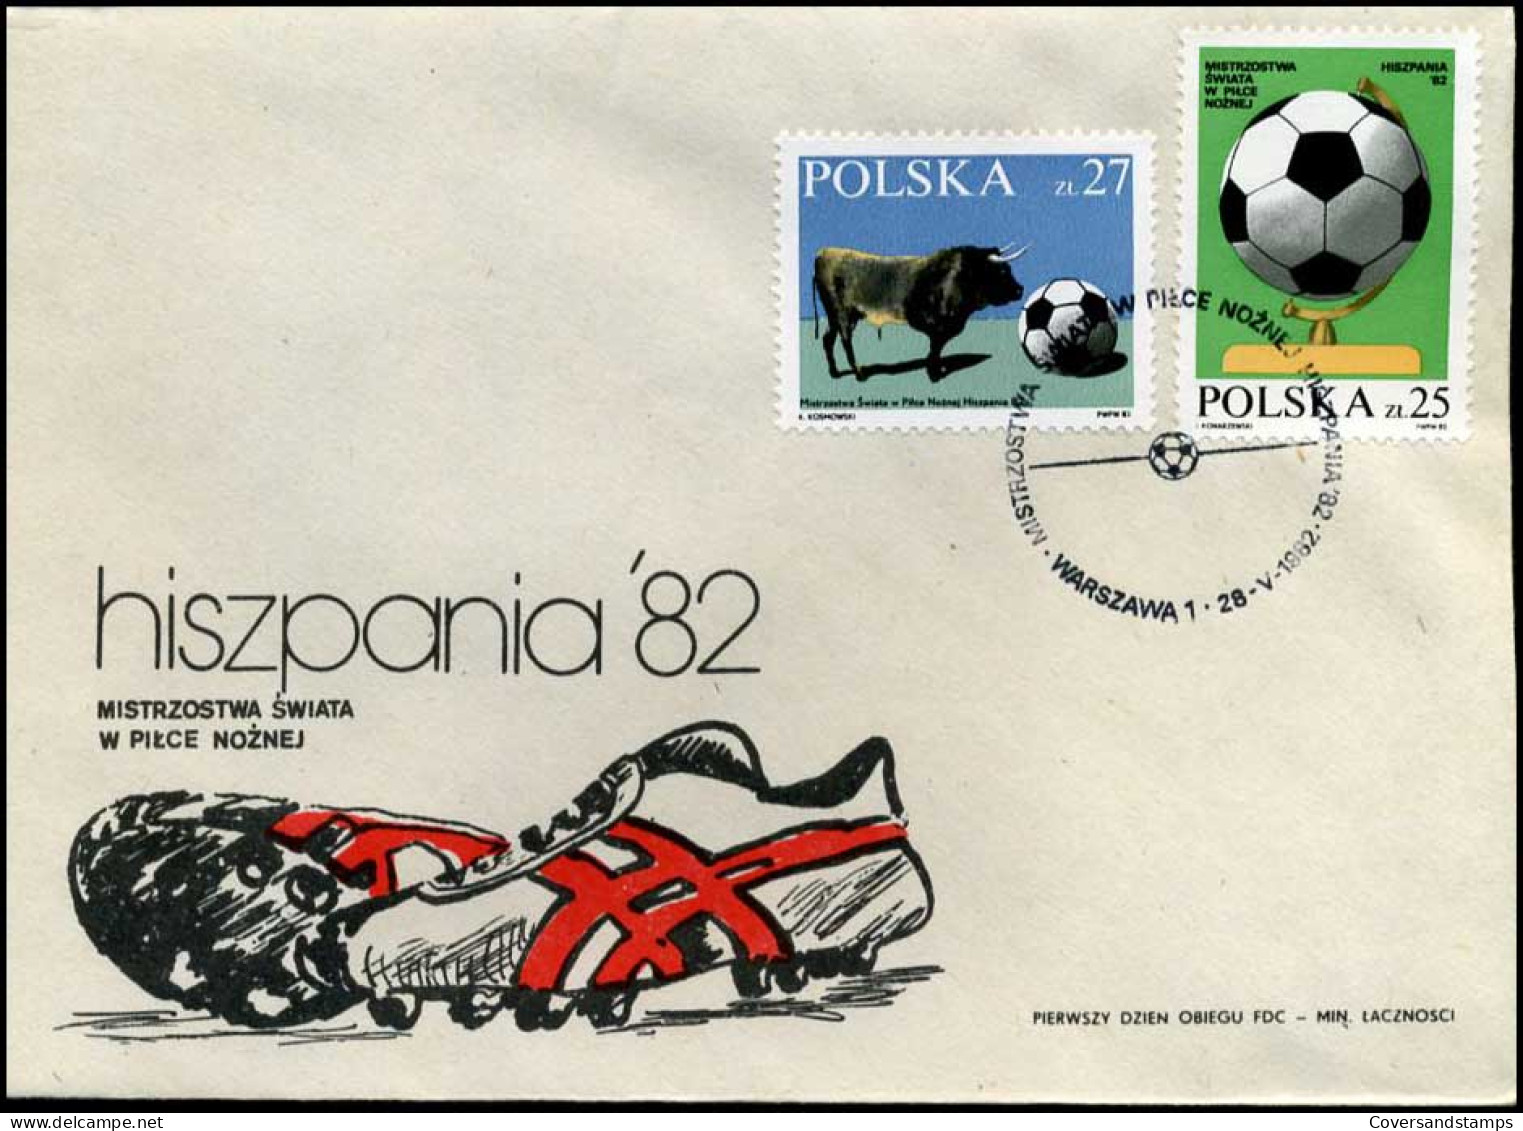 Polen - FDC -  Hiszpania '82 - FDC